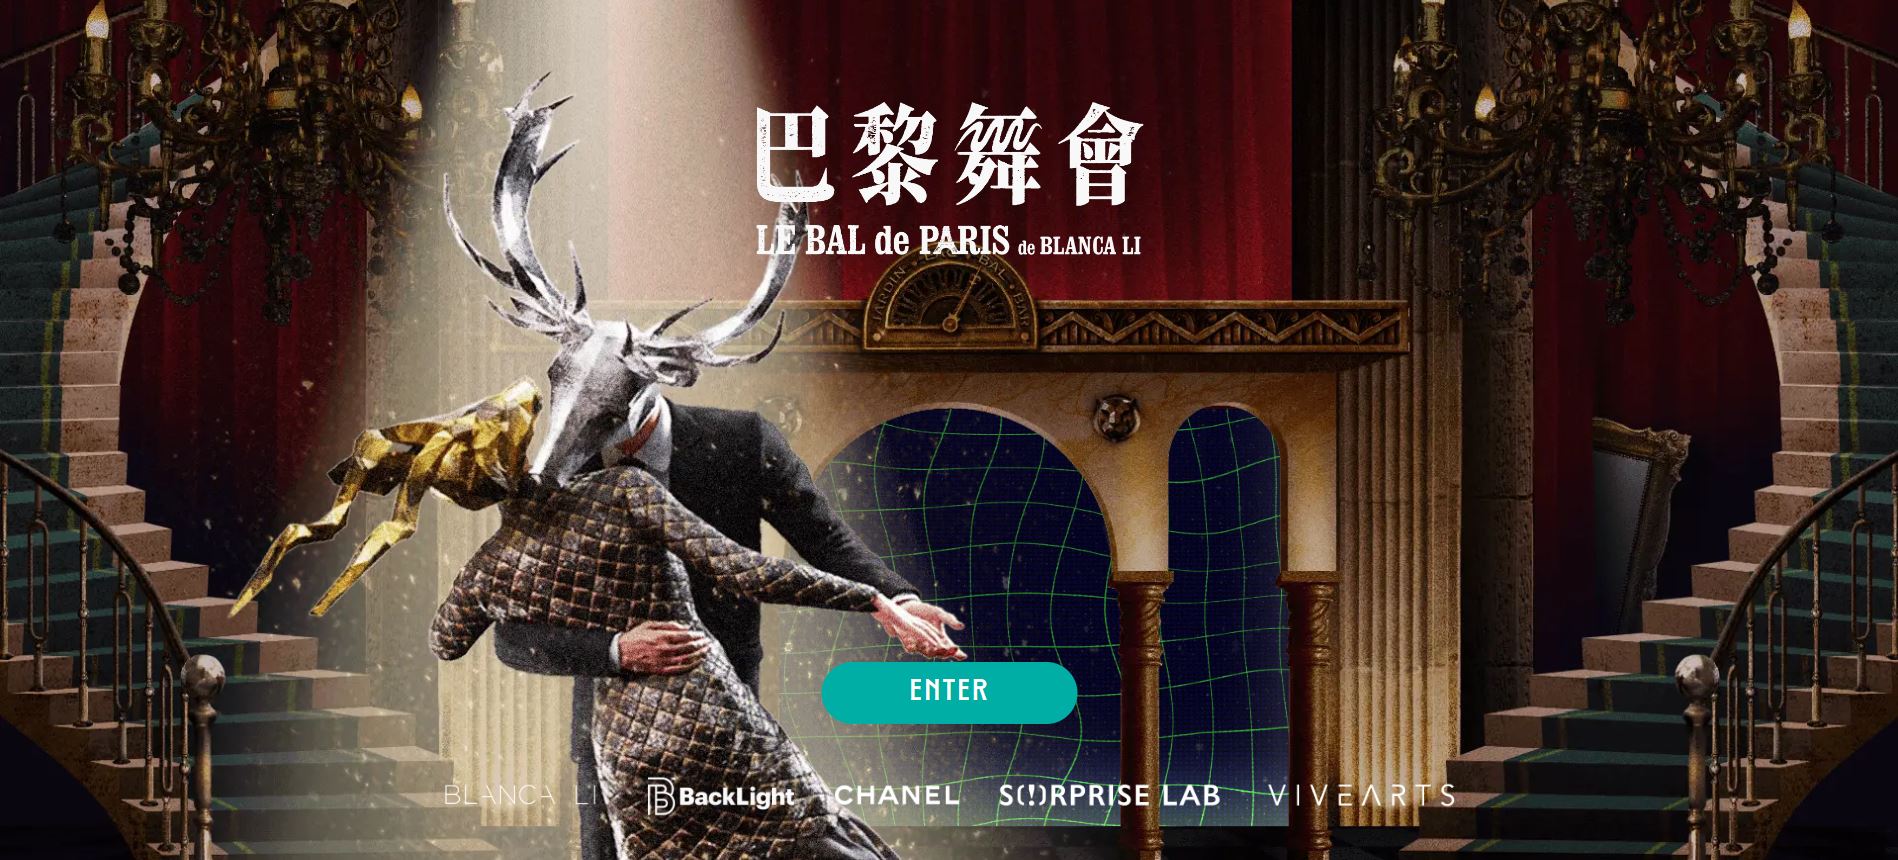 HTC VIVE Arts再現熱門 VR 沉浸互動展演《巴黎舞會》台北場 讓你穿上香奈兒虛擬高級訂製服展開華麗冒險 - 電腦王阿達